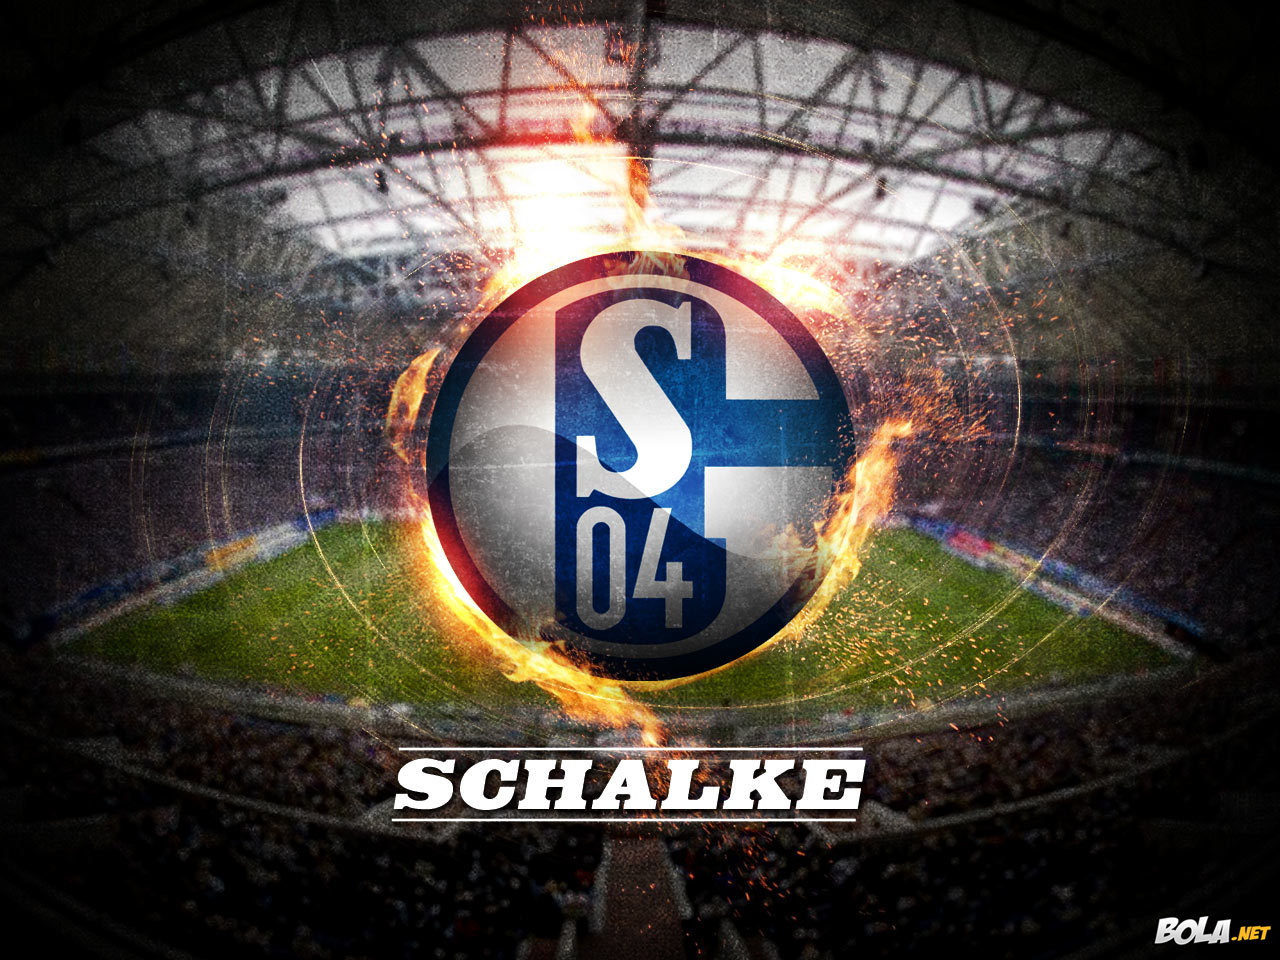 Download Wallpaper Schalke 04 Bolanet